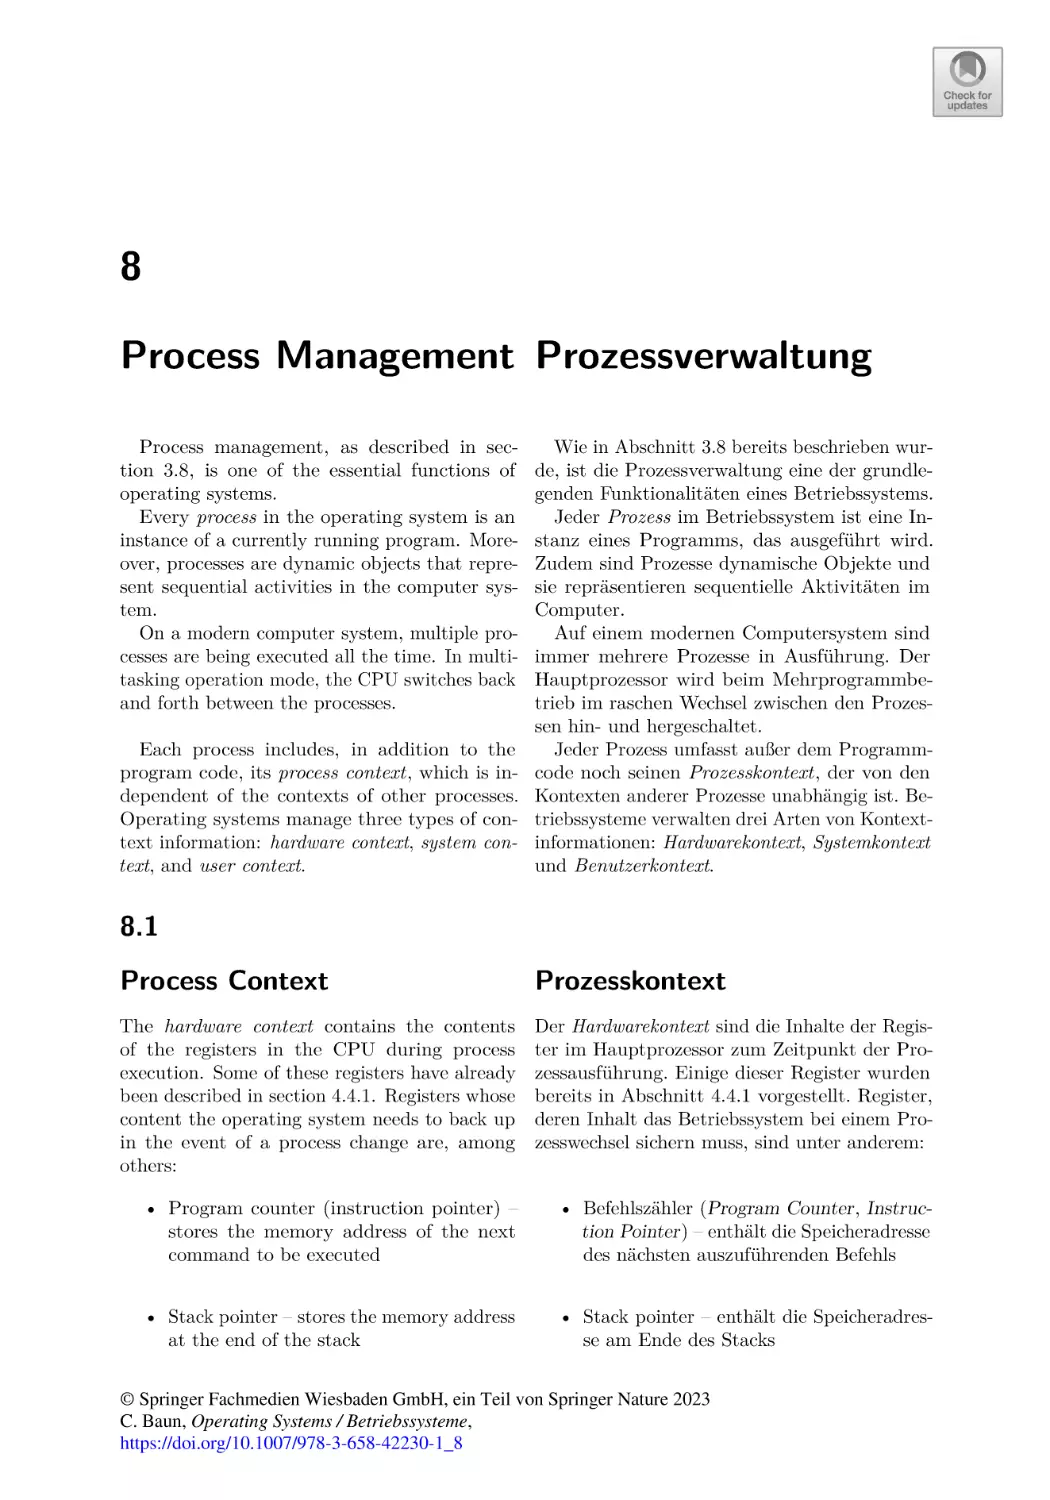 8
Process Management
8.1
Process Context